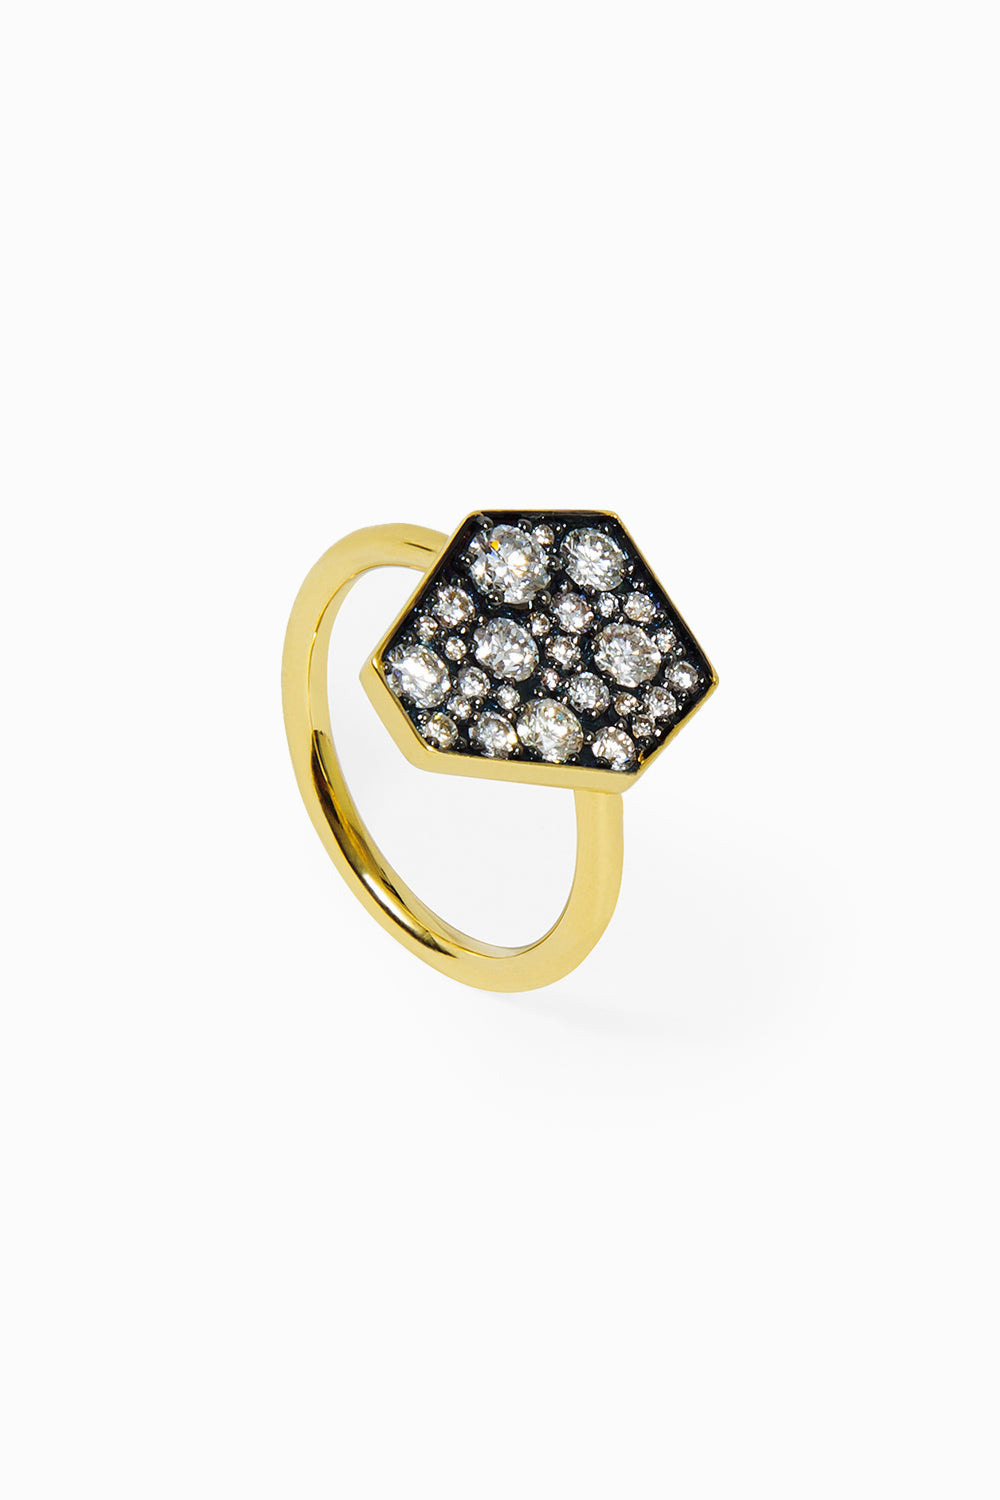 Gold and black rhodium hexagonal ring